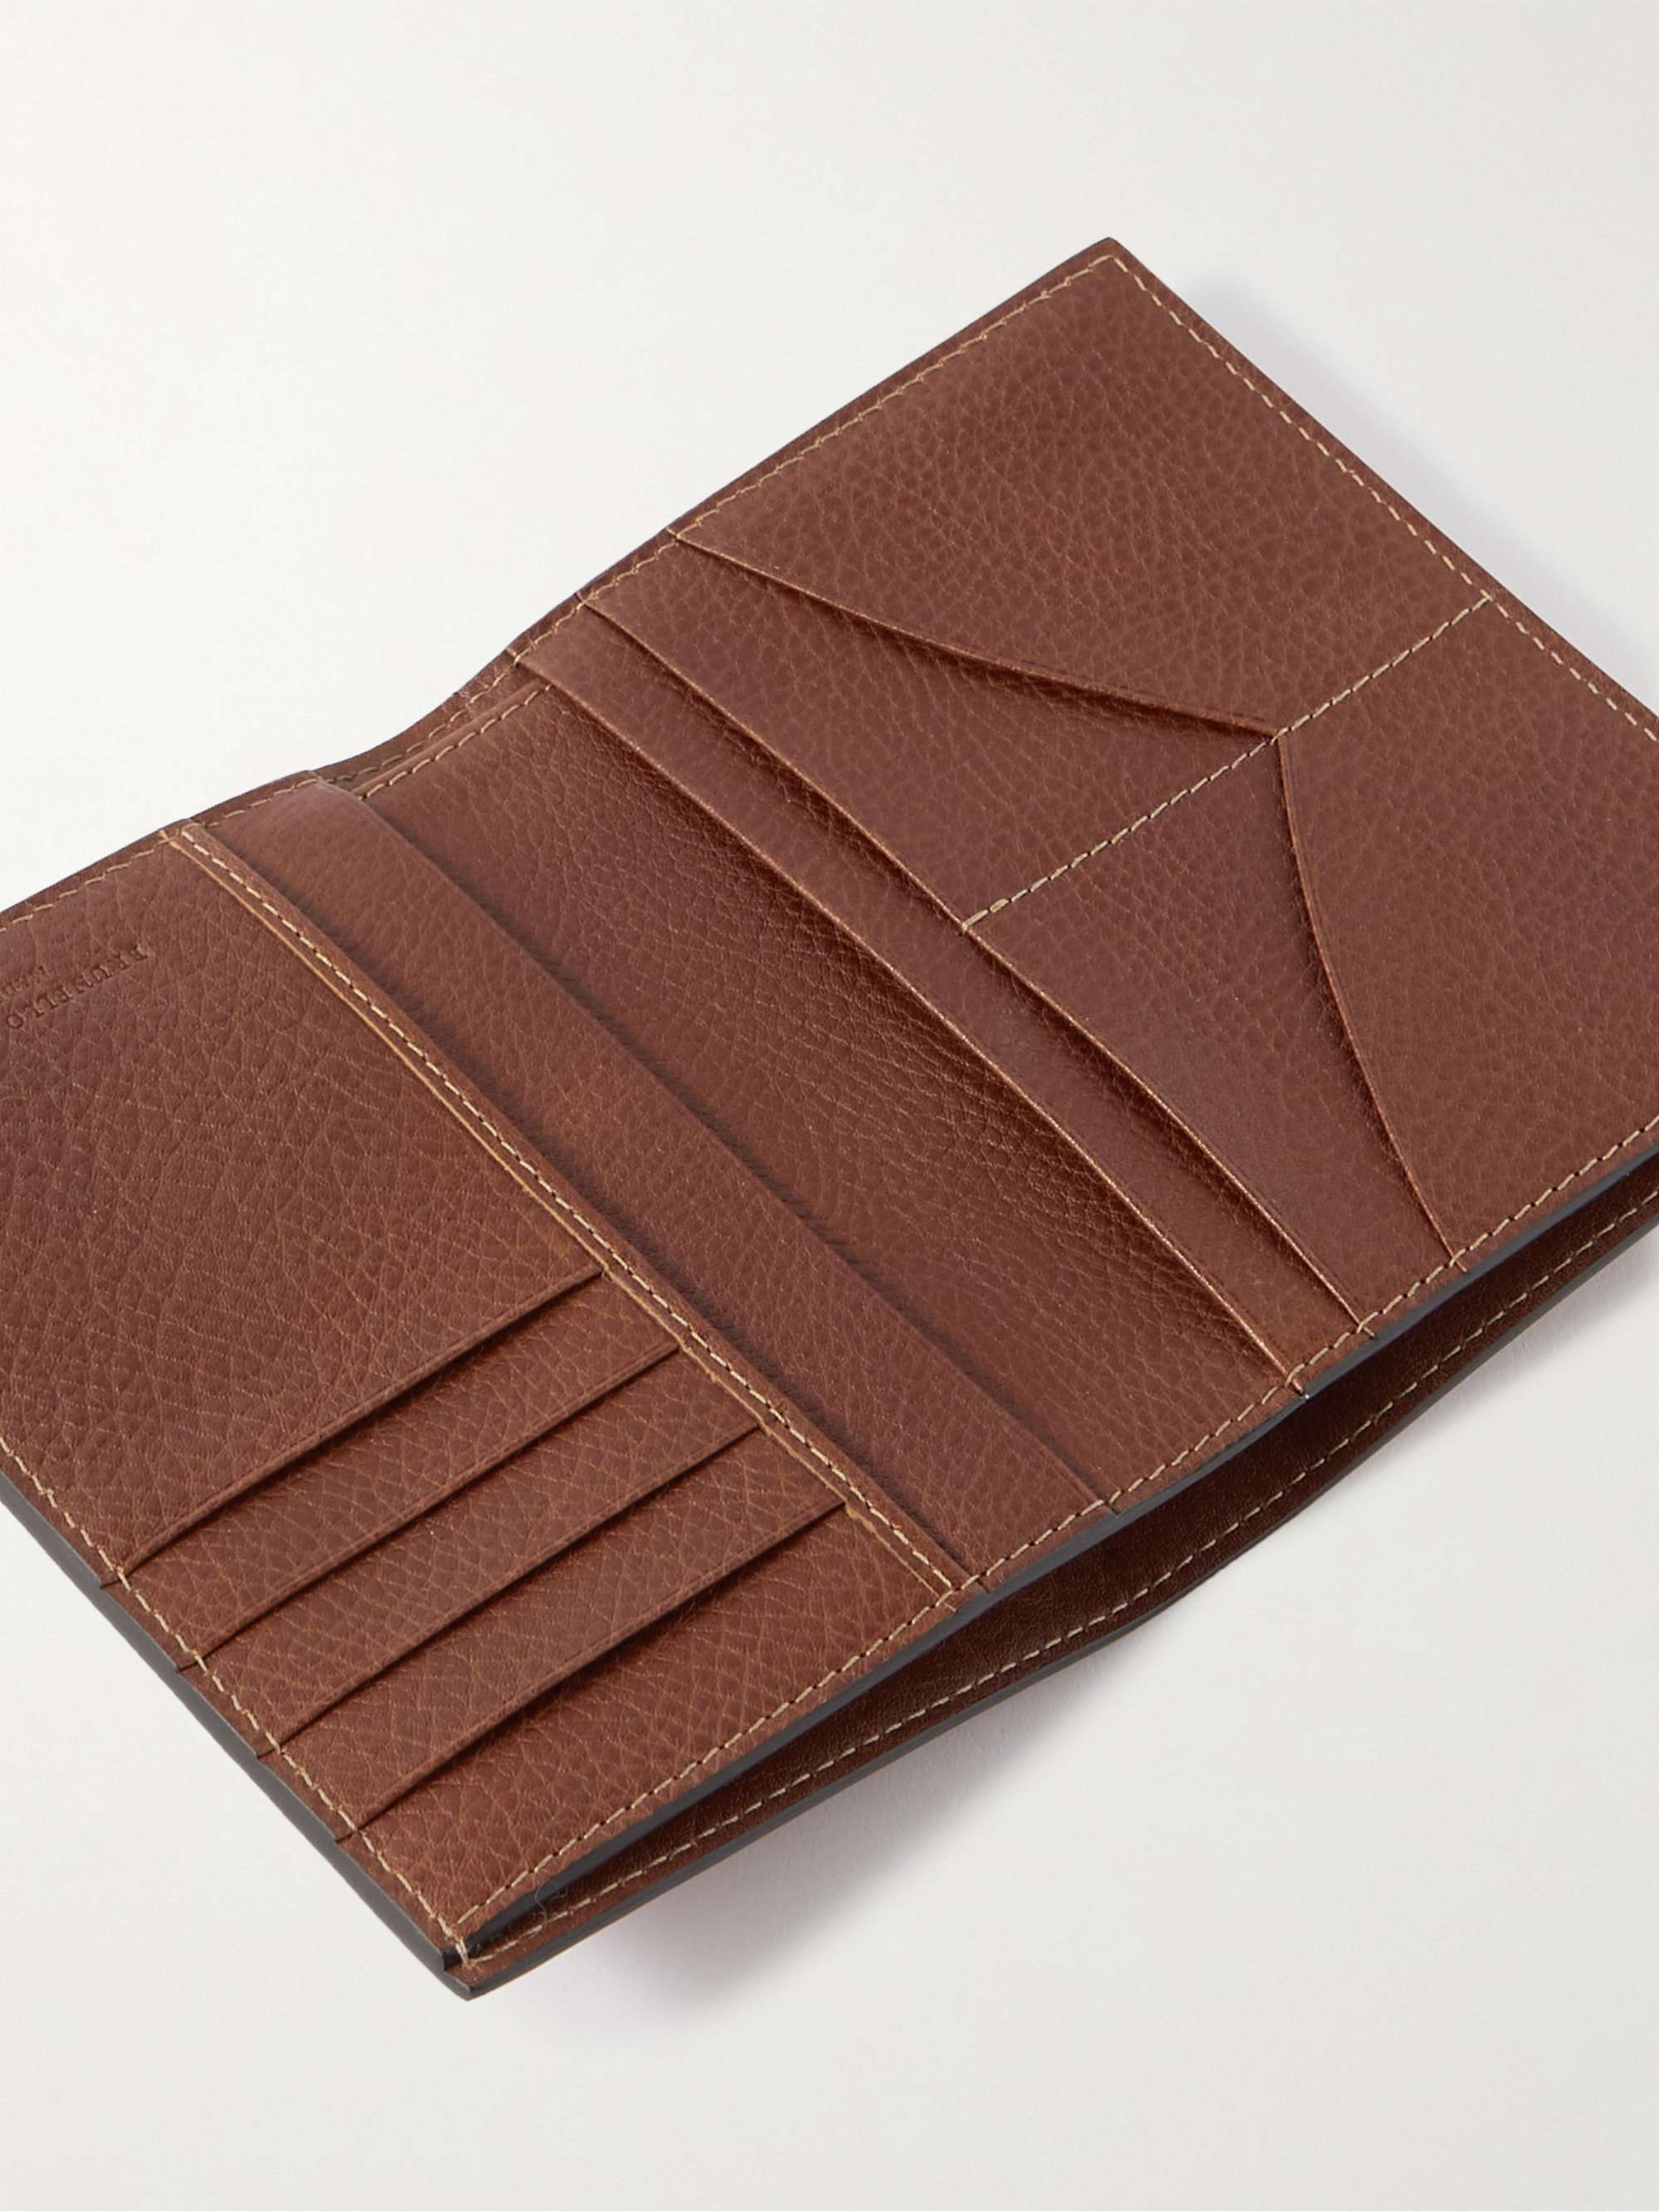 BRUNELLO CUCINELLI Full-Grain Leather Billfold Wallet